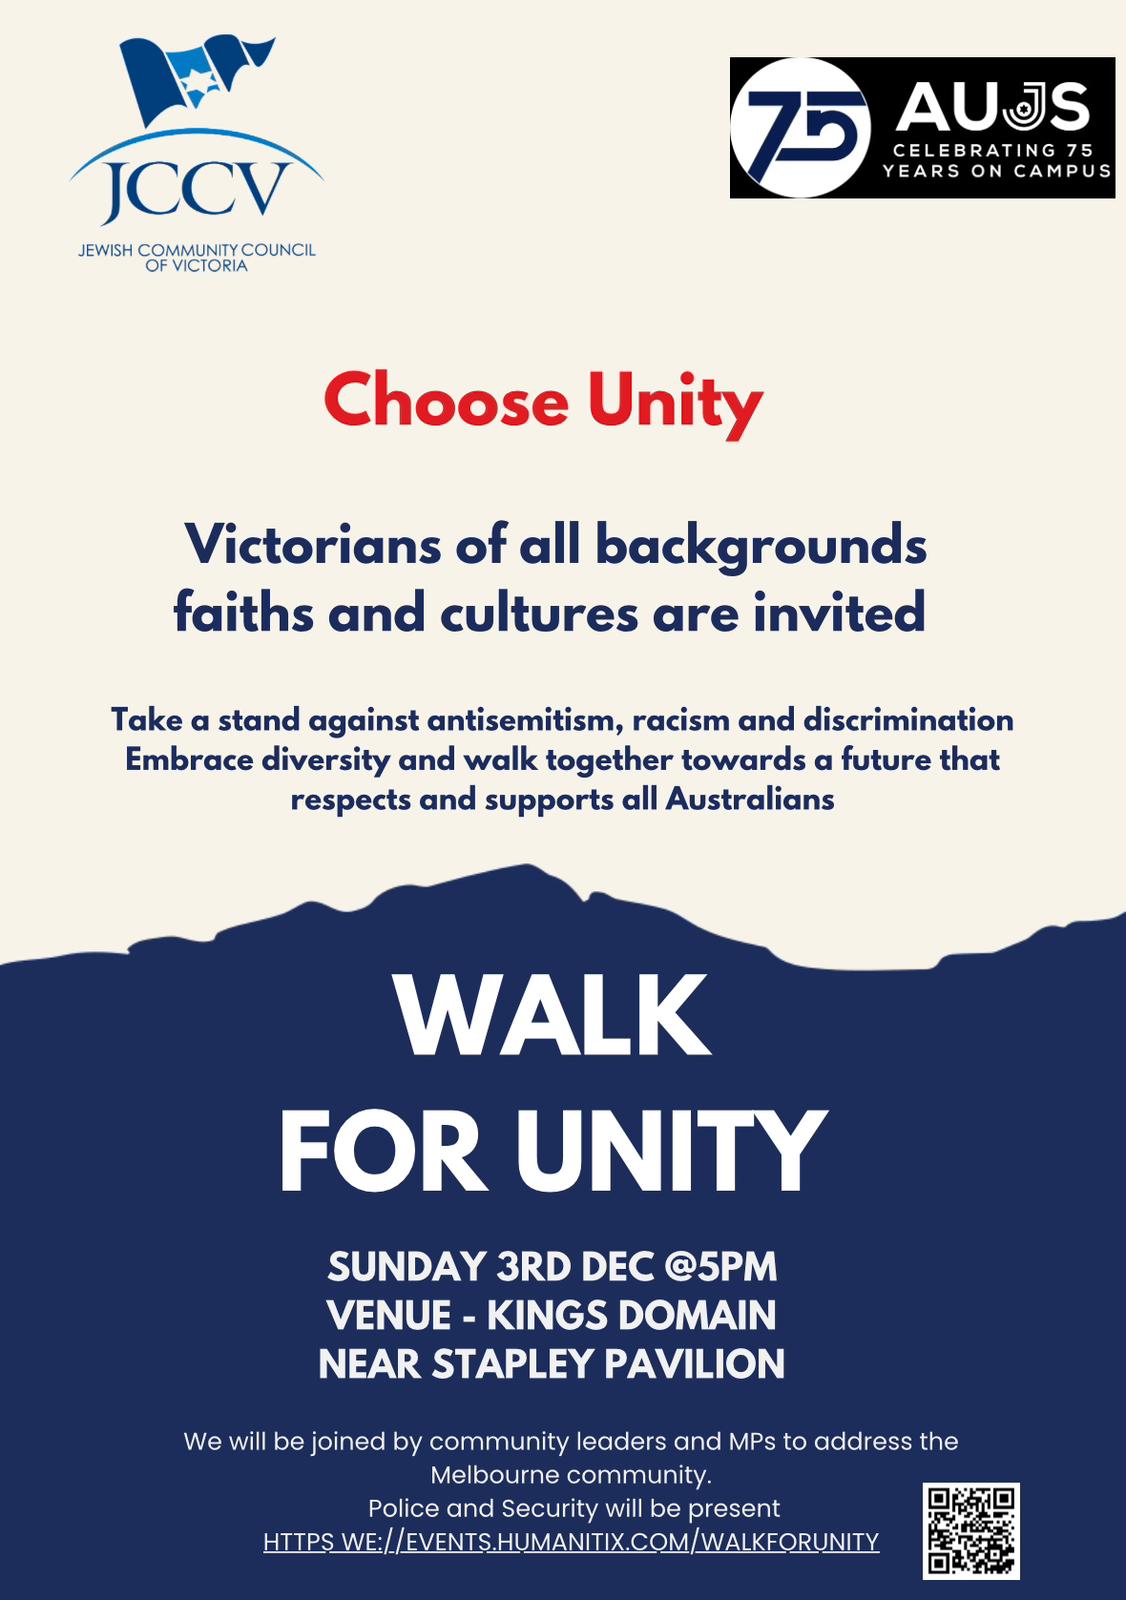 Walk for Unity